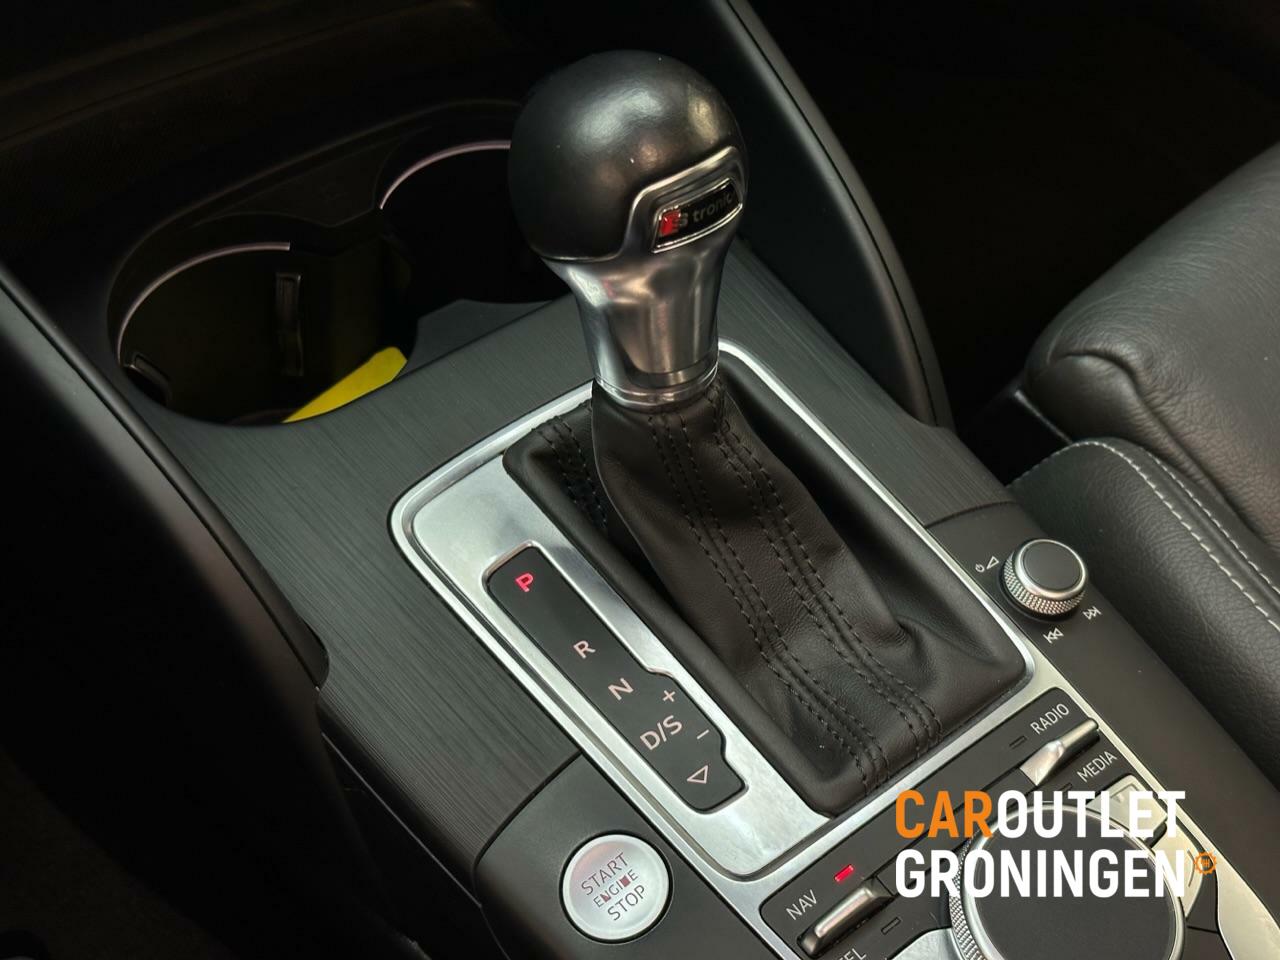 Caroutlet Groningen - Audi A3 Sportback 1.4 TFSI Ambition Pro Line | LED | PANO | AUTOMAAT